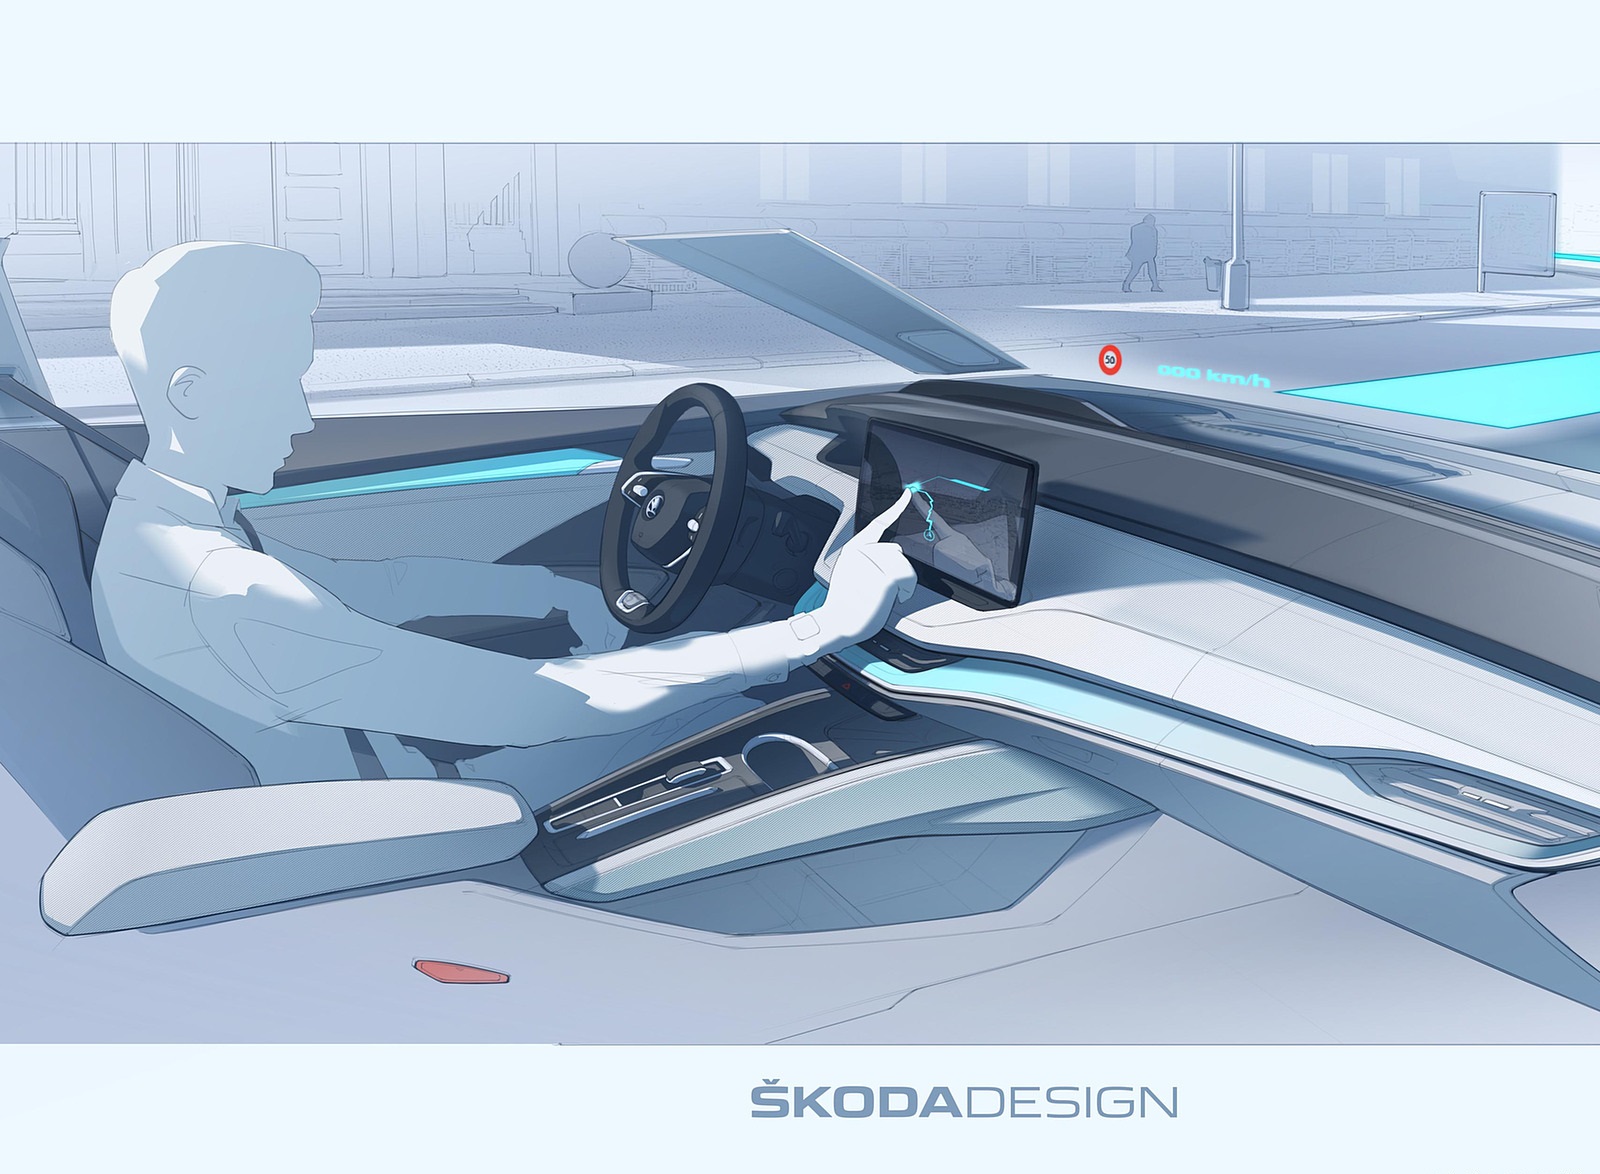 2021 Škoda ENYAQ iV Design Sketch Wallpapers  #181 of 184